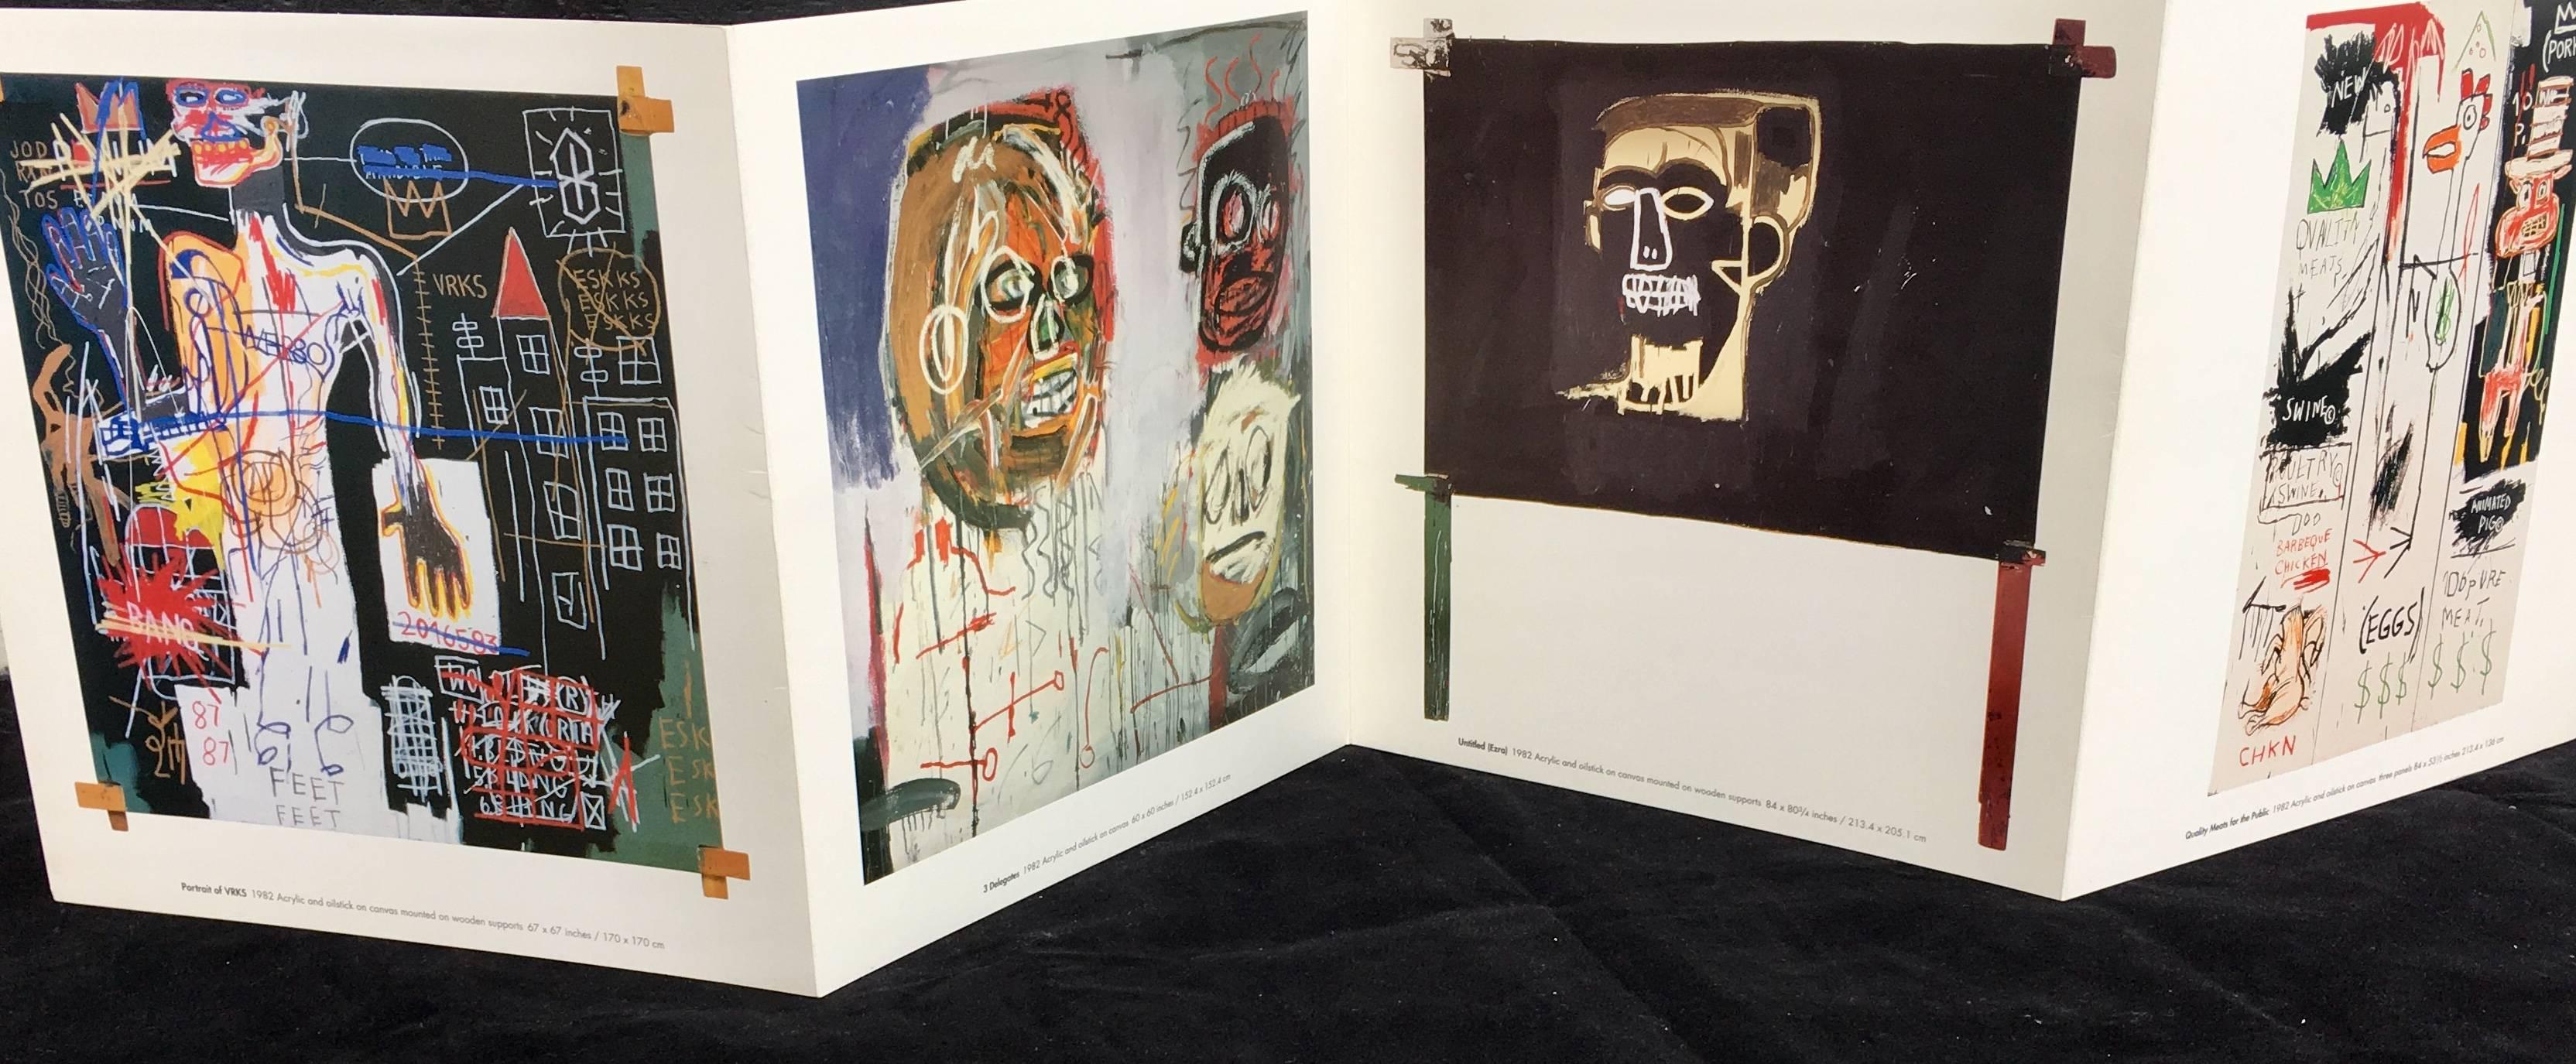 Basquiat announcement card/poster (Tony Shafrazi Gallery) 1